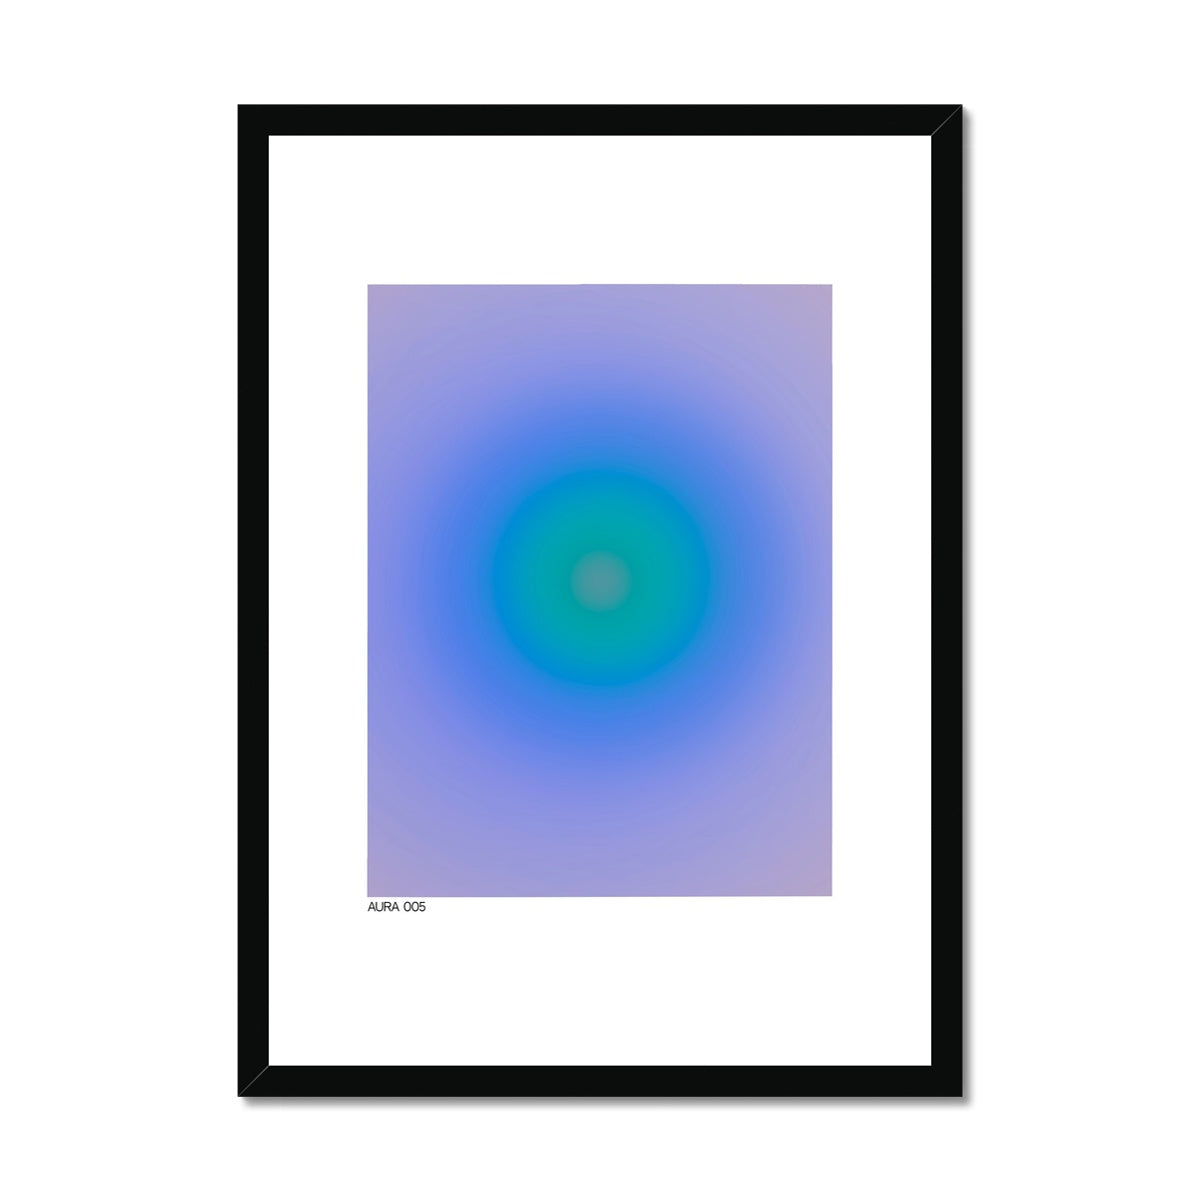 aura 005 Framed & Mounted Print